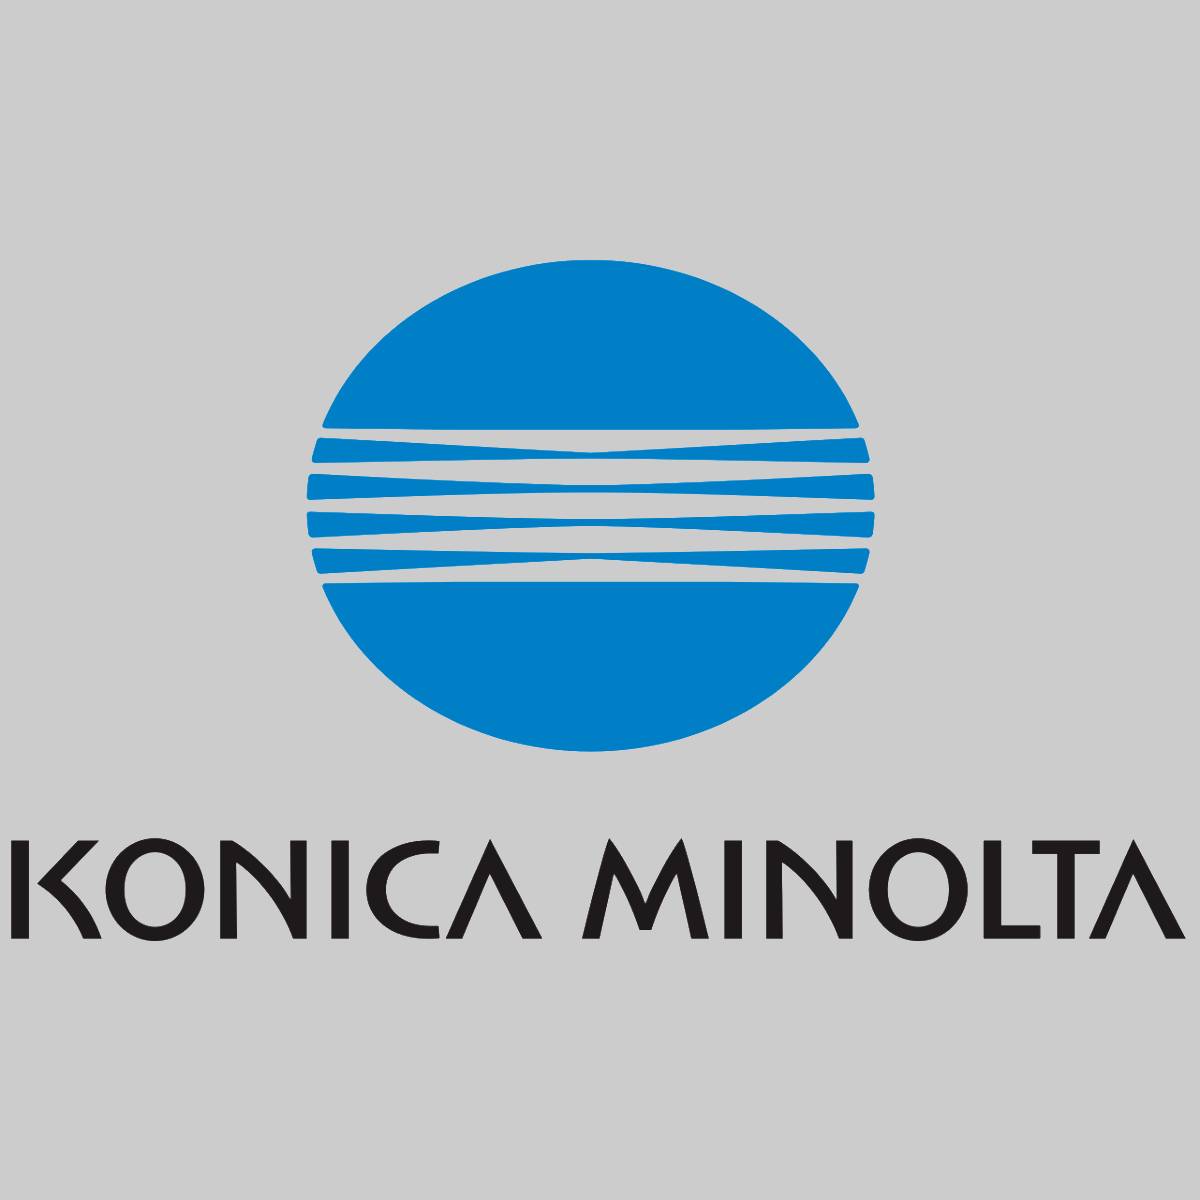 "Original Konica Minolta TN120 Toner Black 9967000777 for Bizhub 240 240F